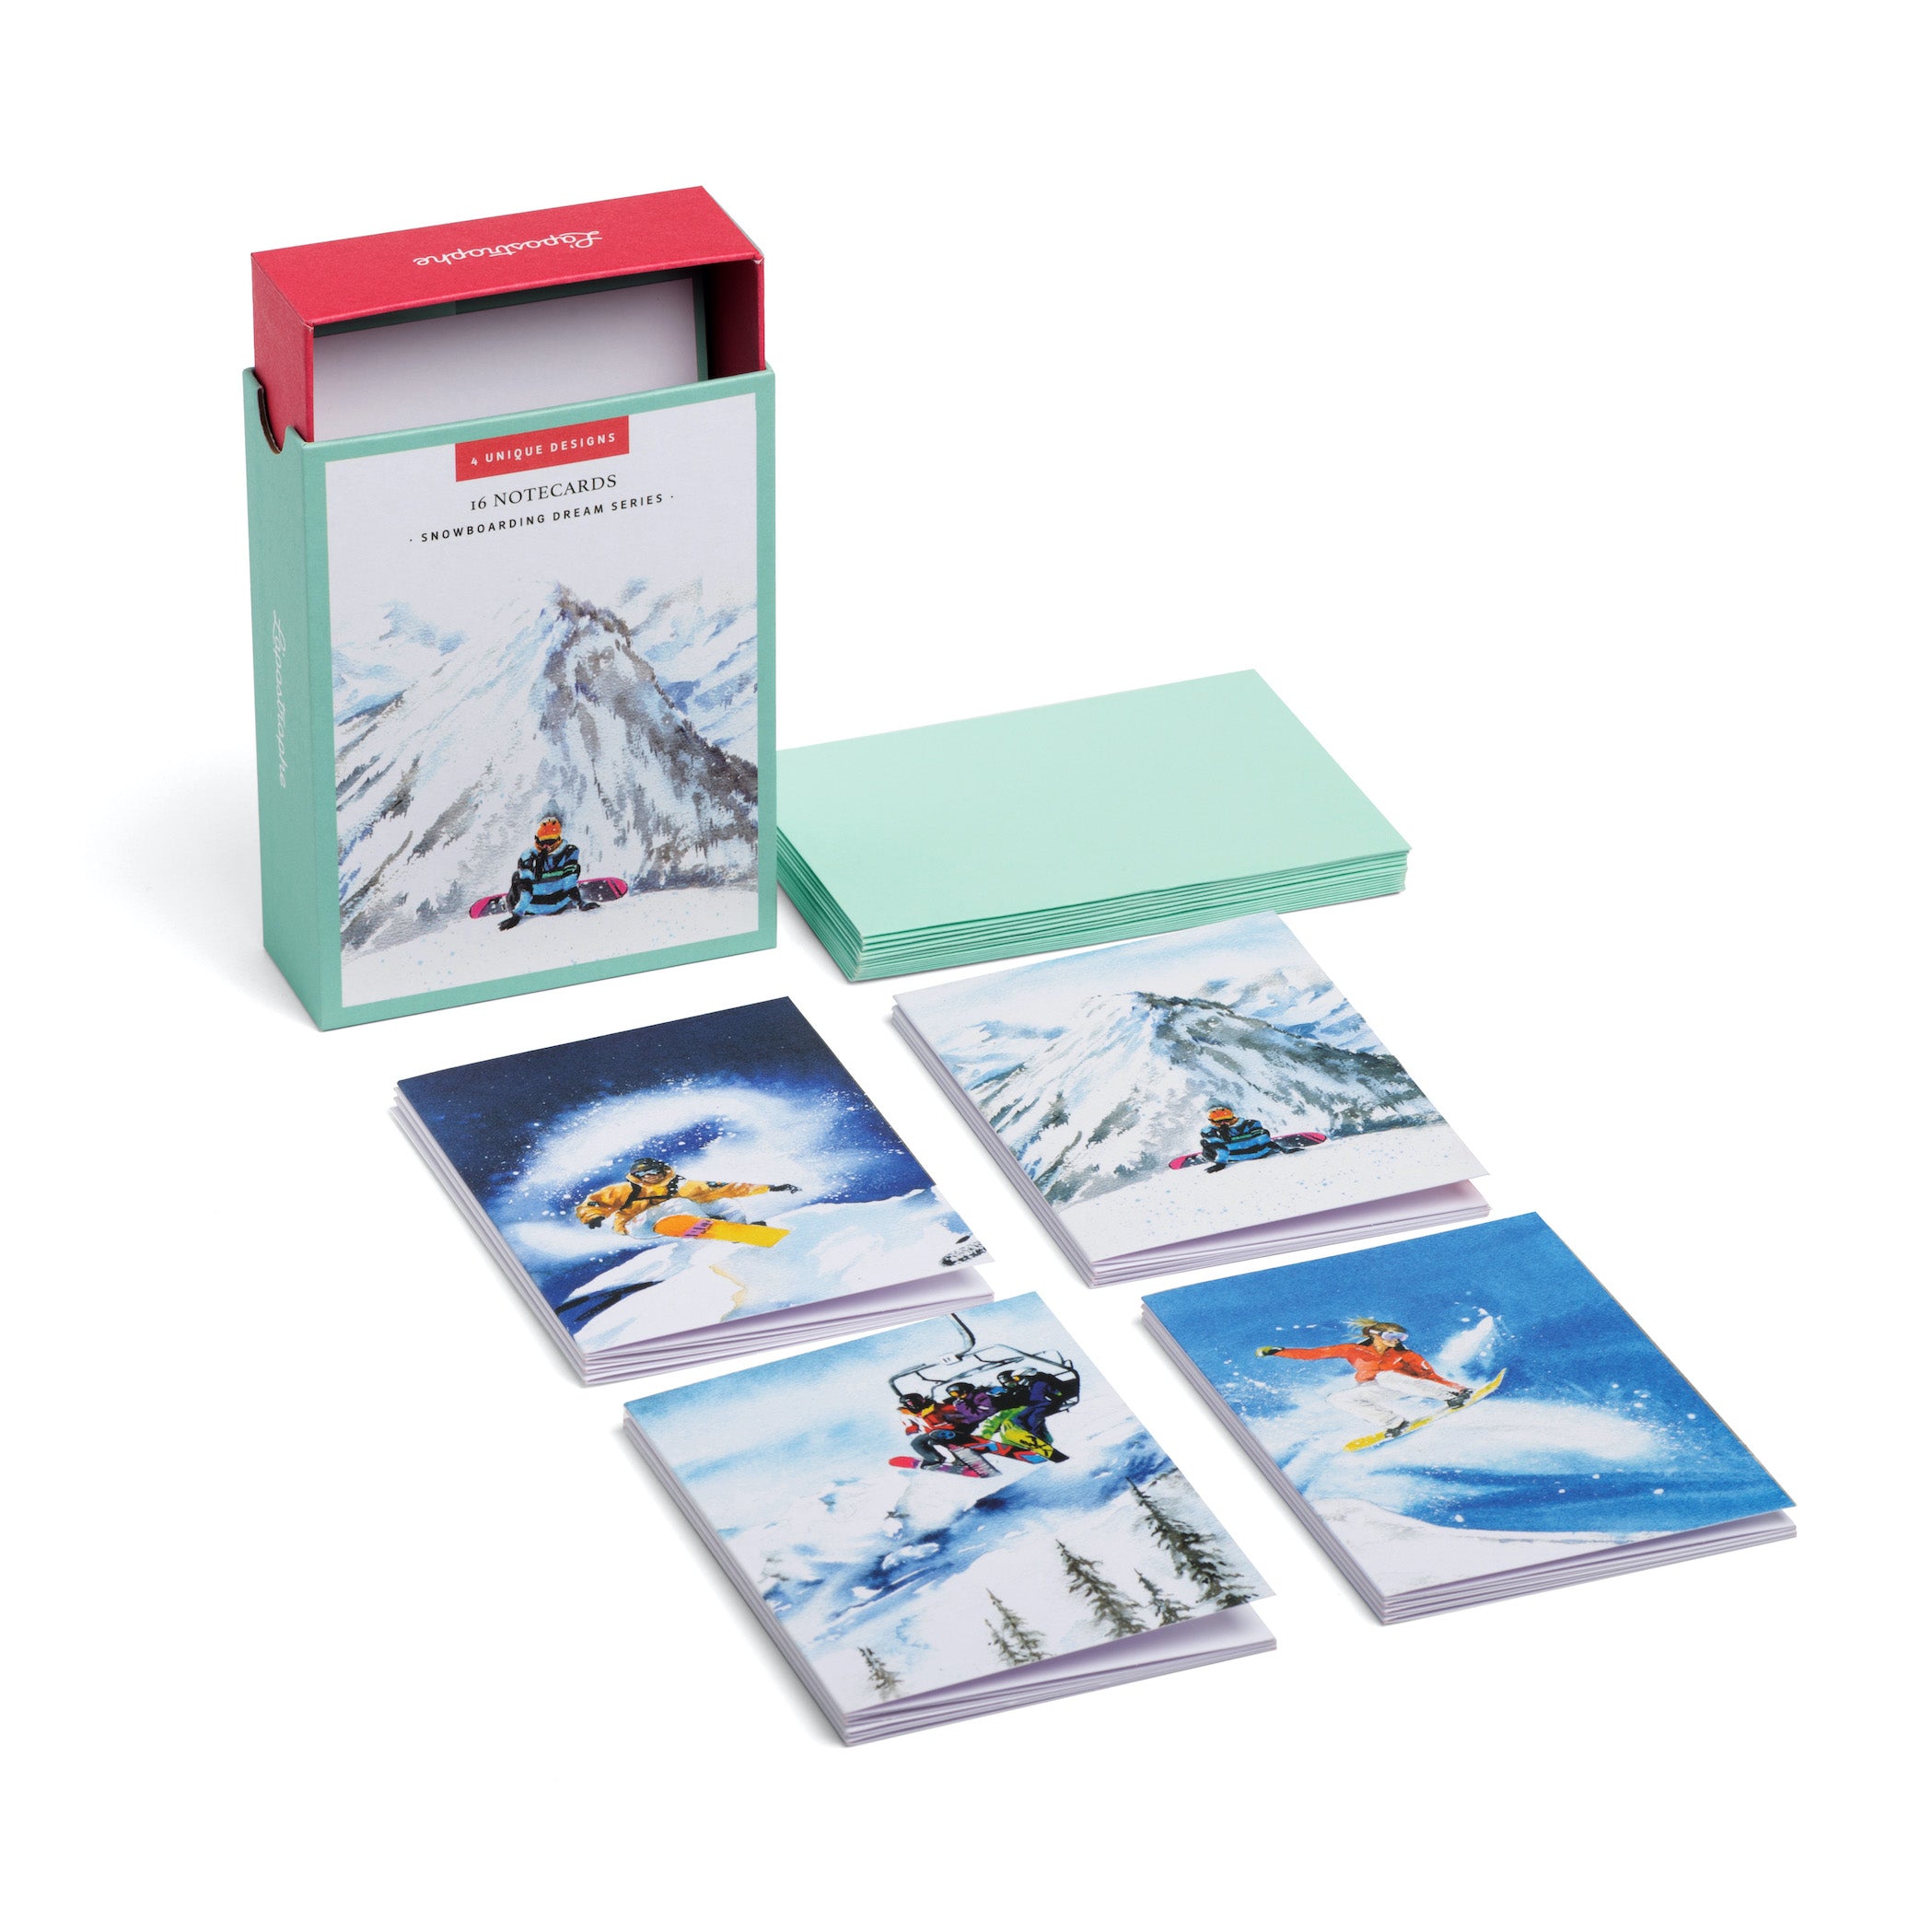 Notecard Set - Snowboarding Dream (WS)